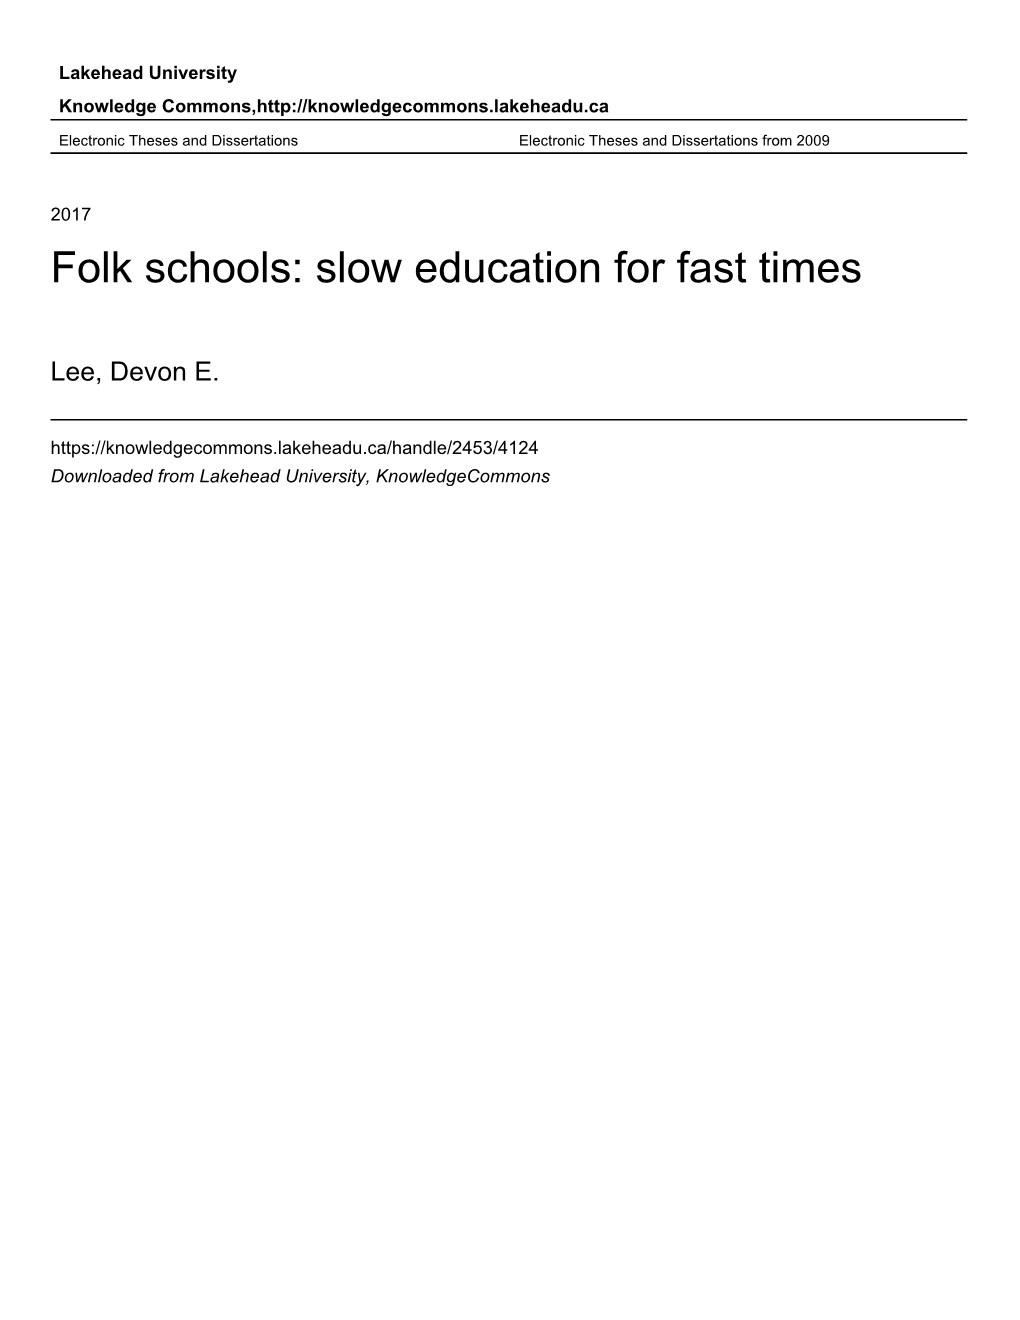 Folk Schools: Slow Education for Fast Times